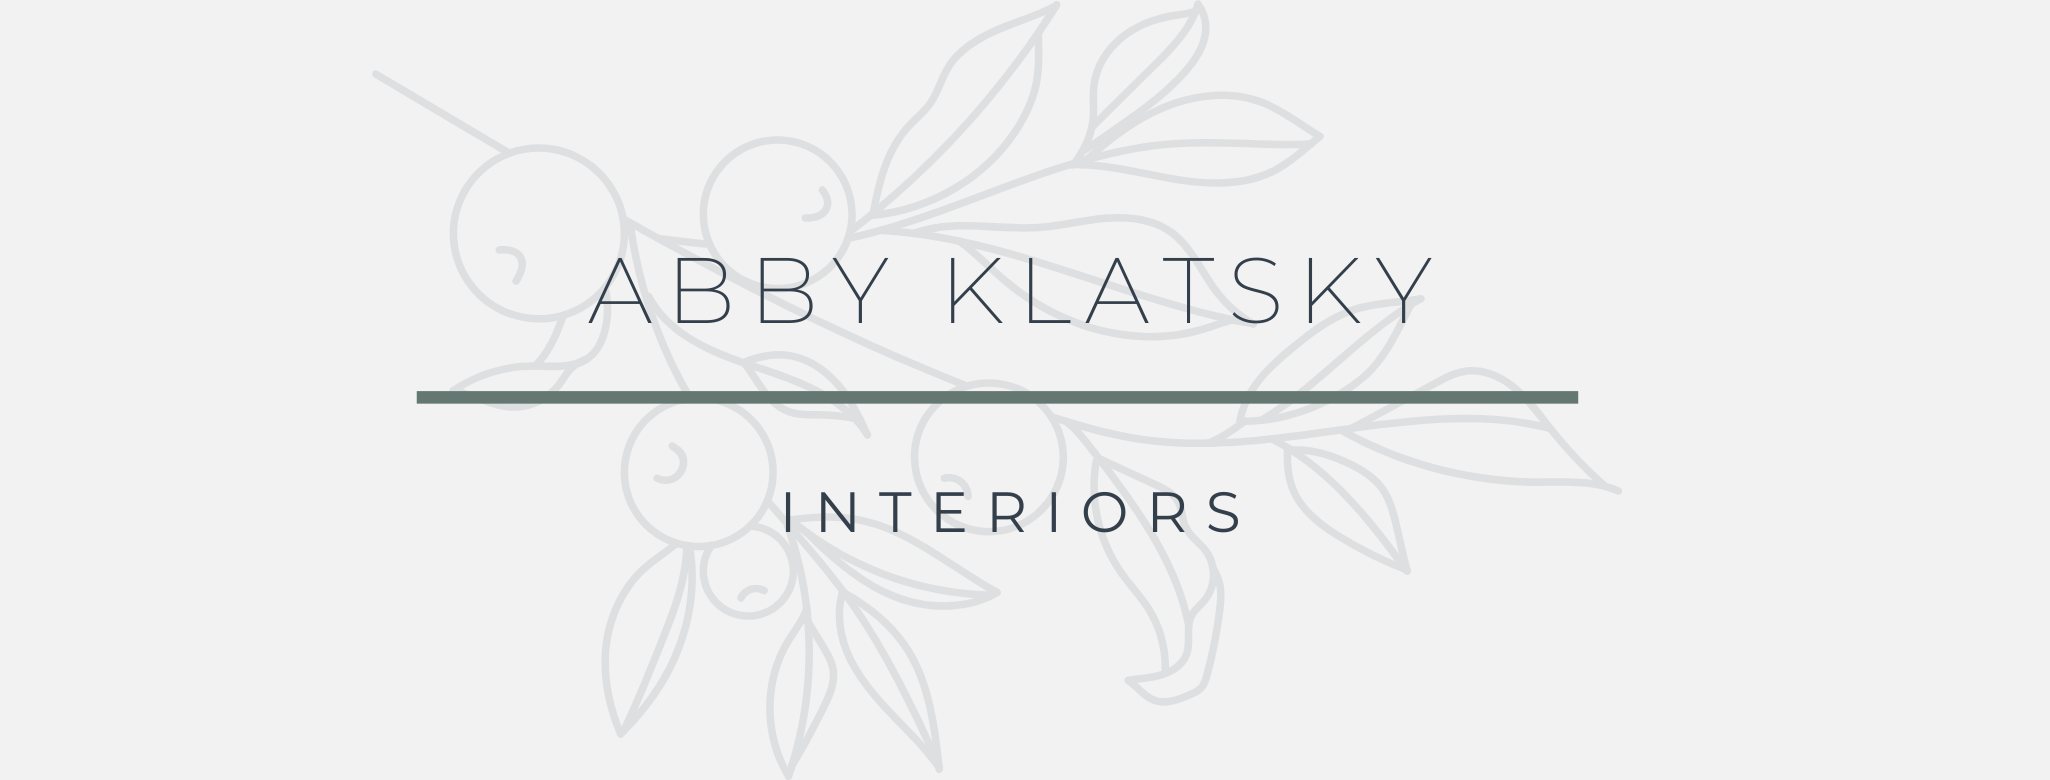 ABBY KLATSKY INTERIORS